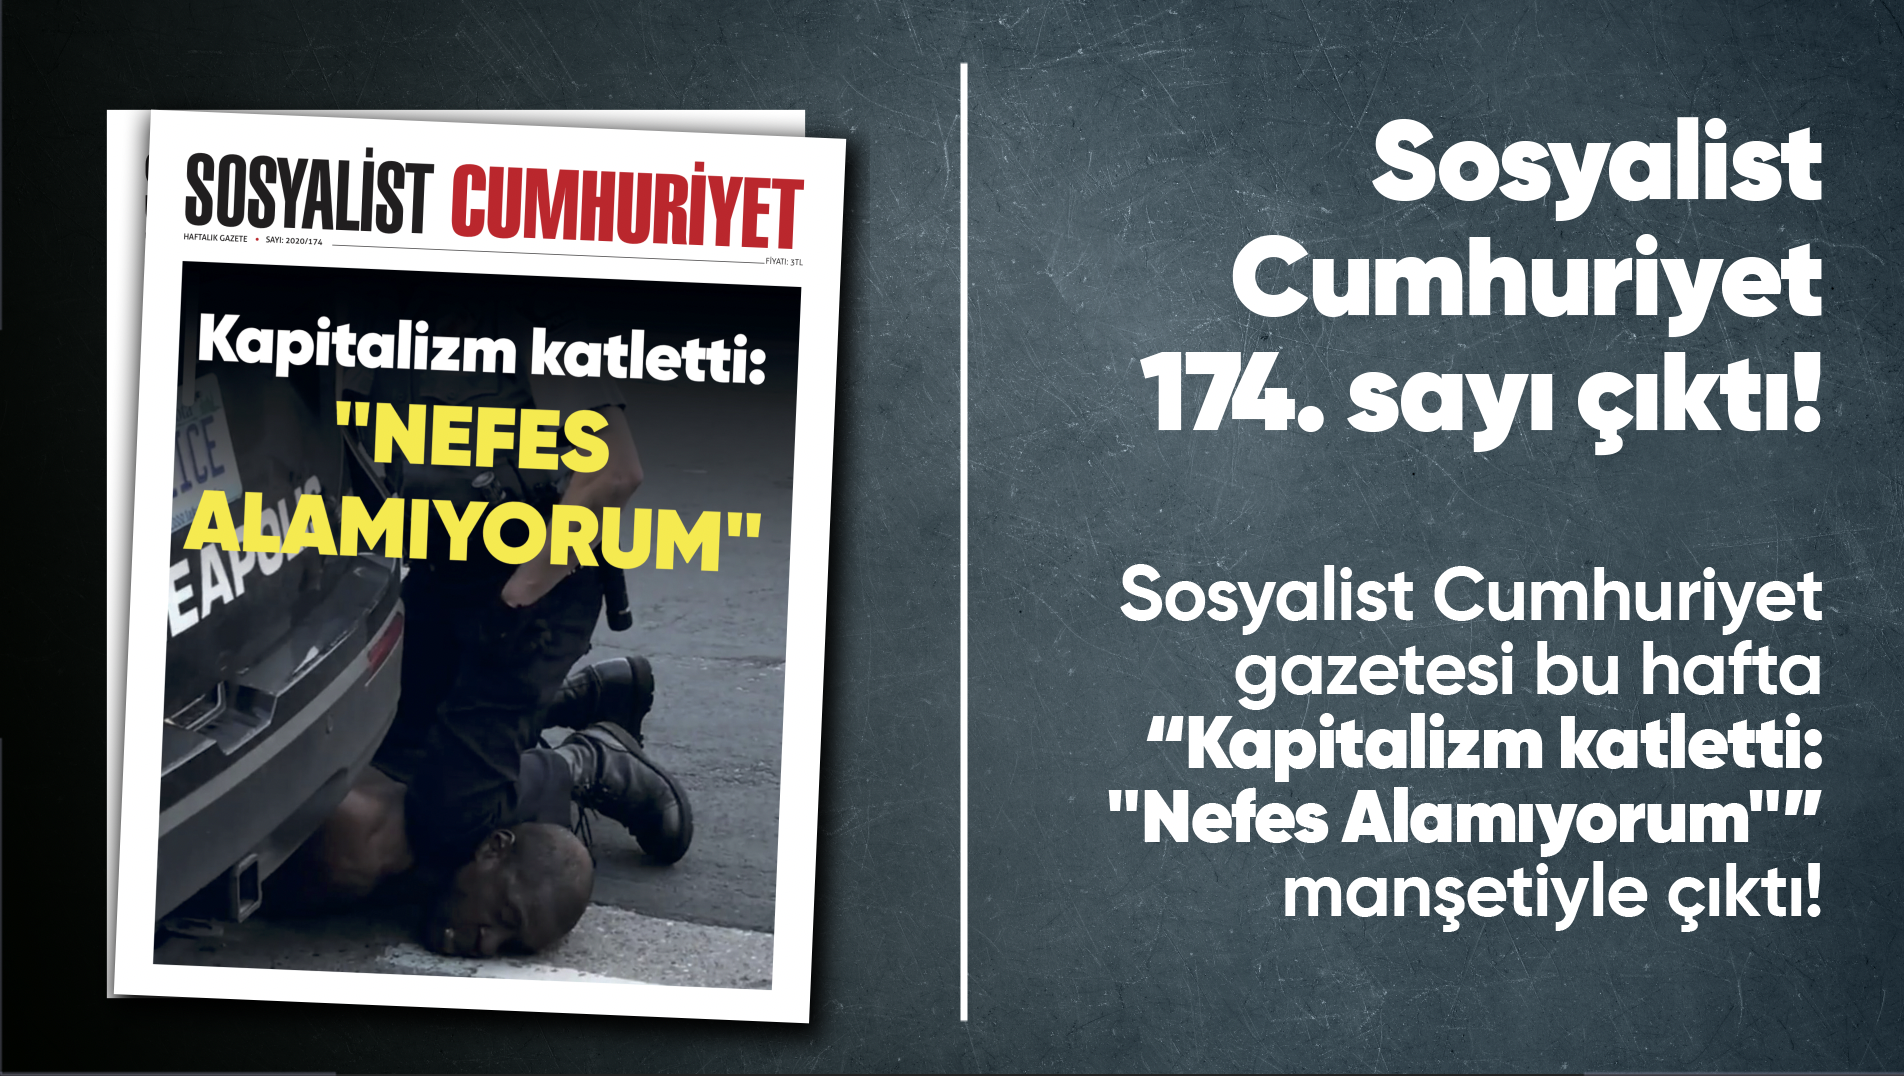 Sosyalist Cumhuriyet 174.sayı